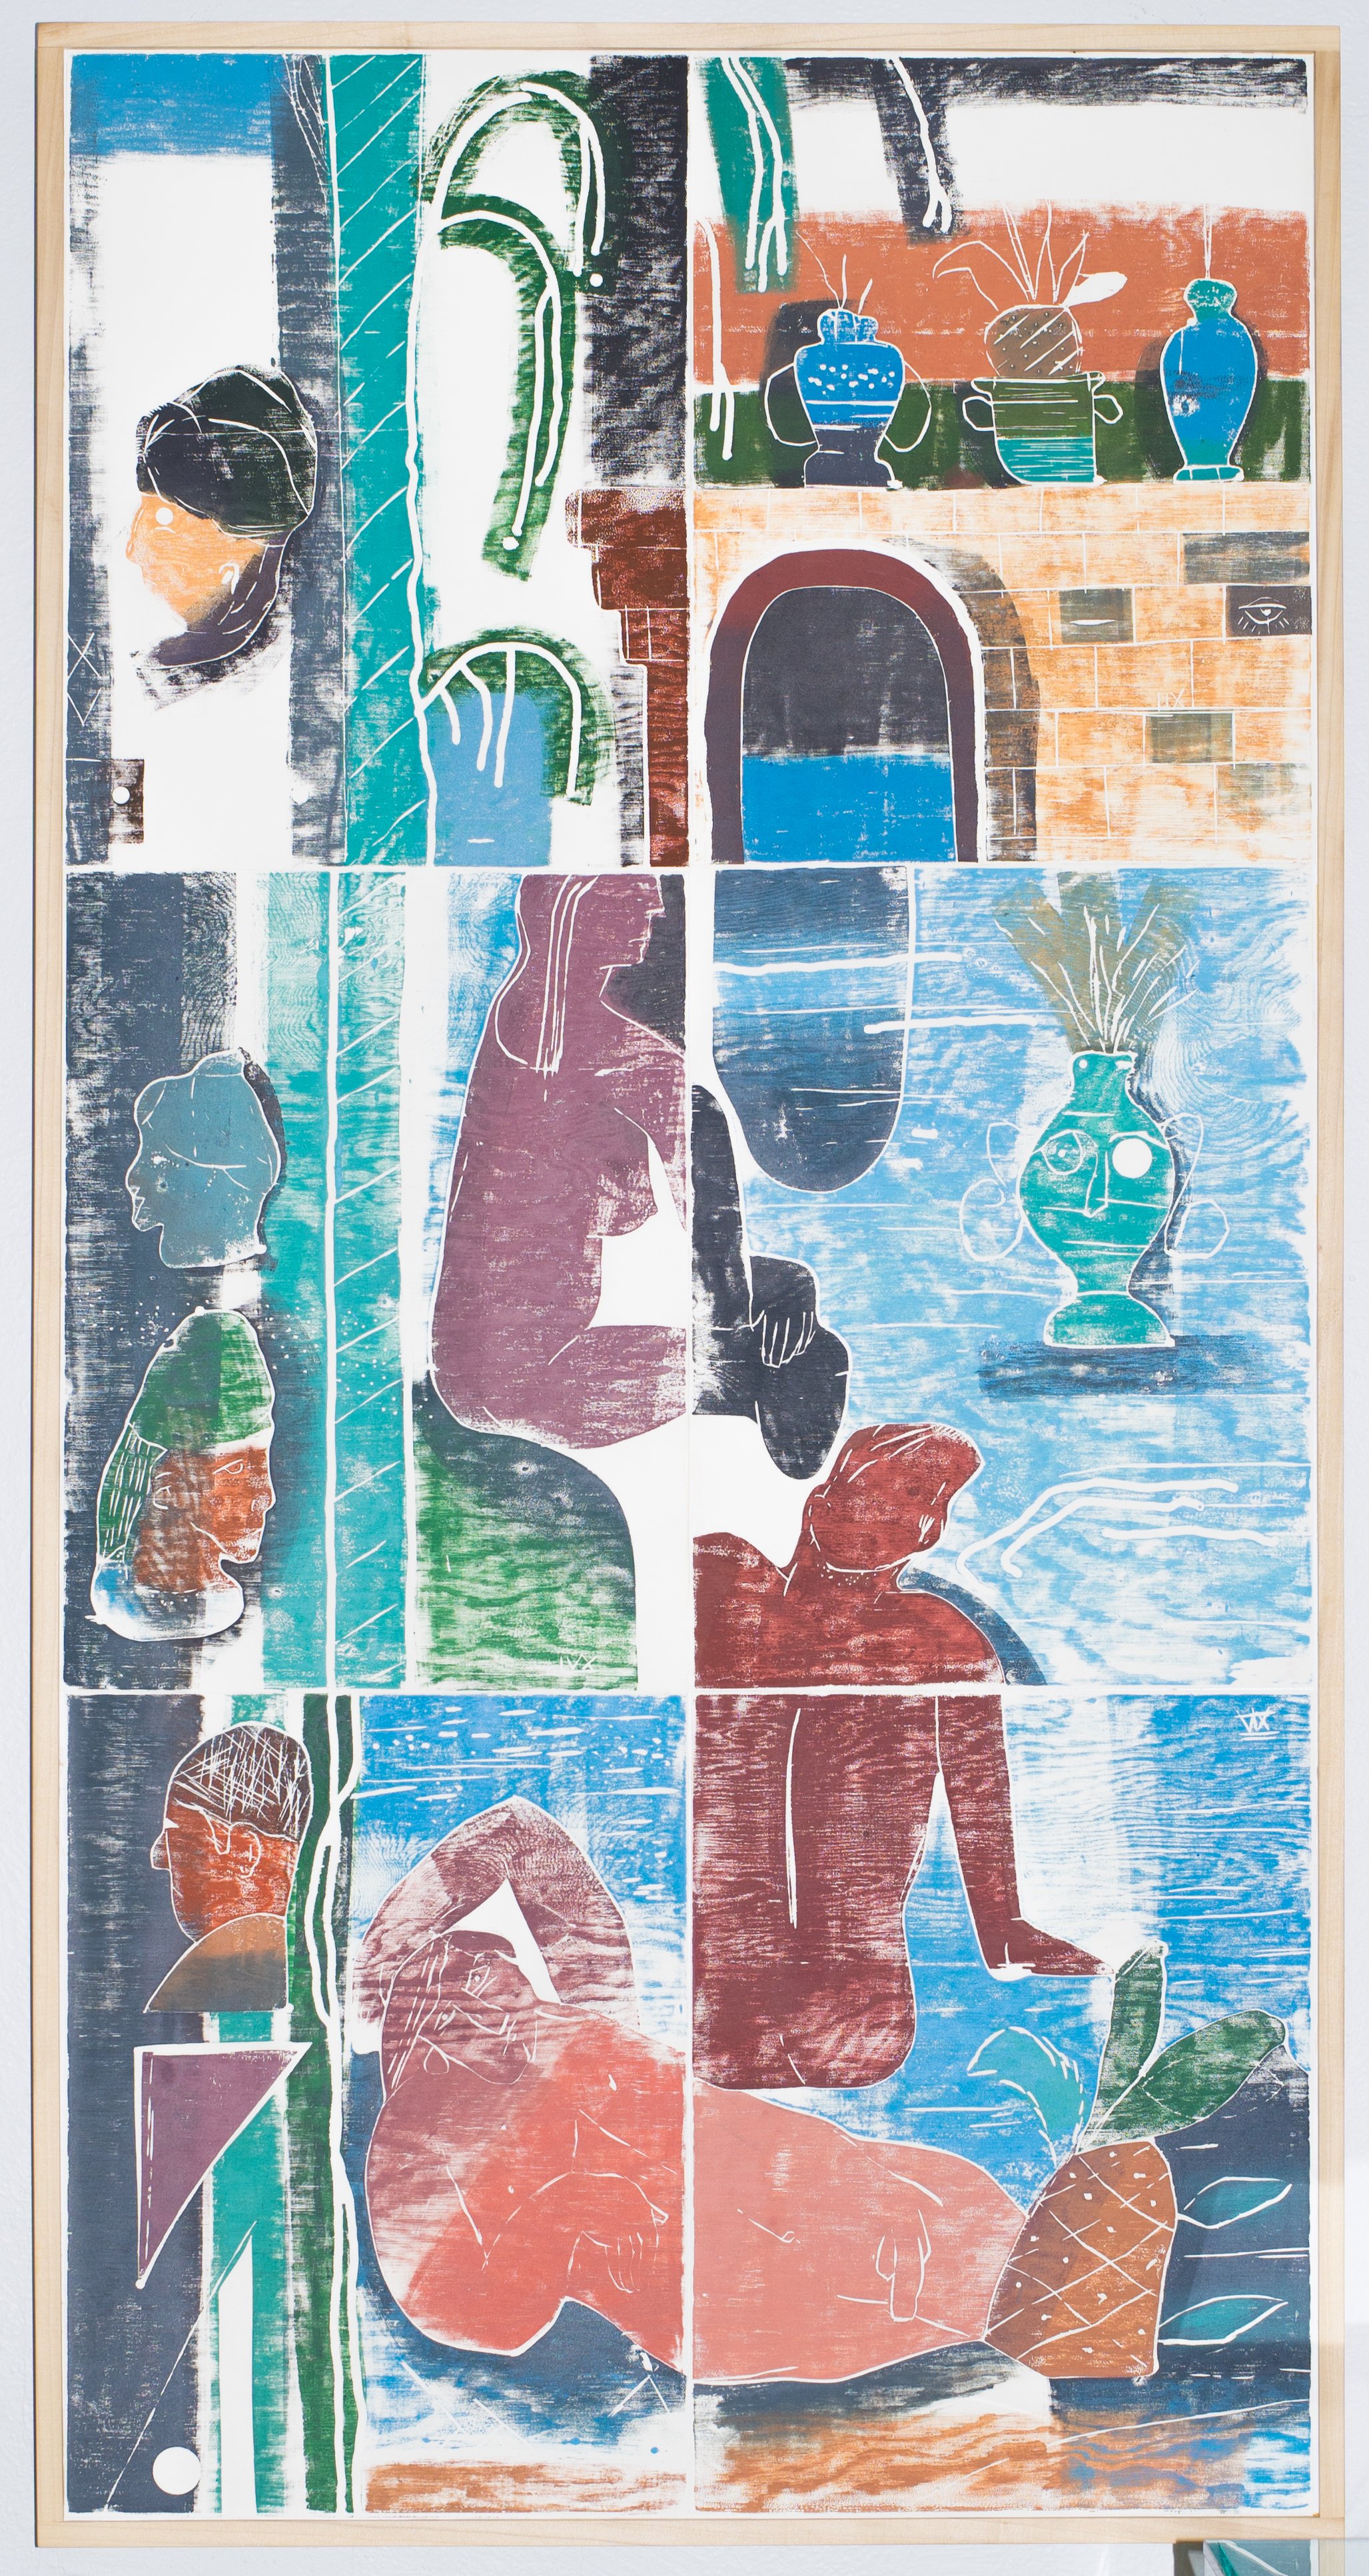   Bathers  (panel one)  multi-color woodblock monoprint   2017 